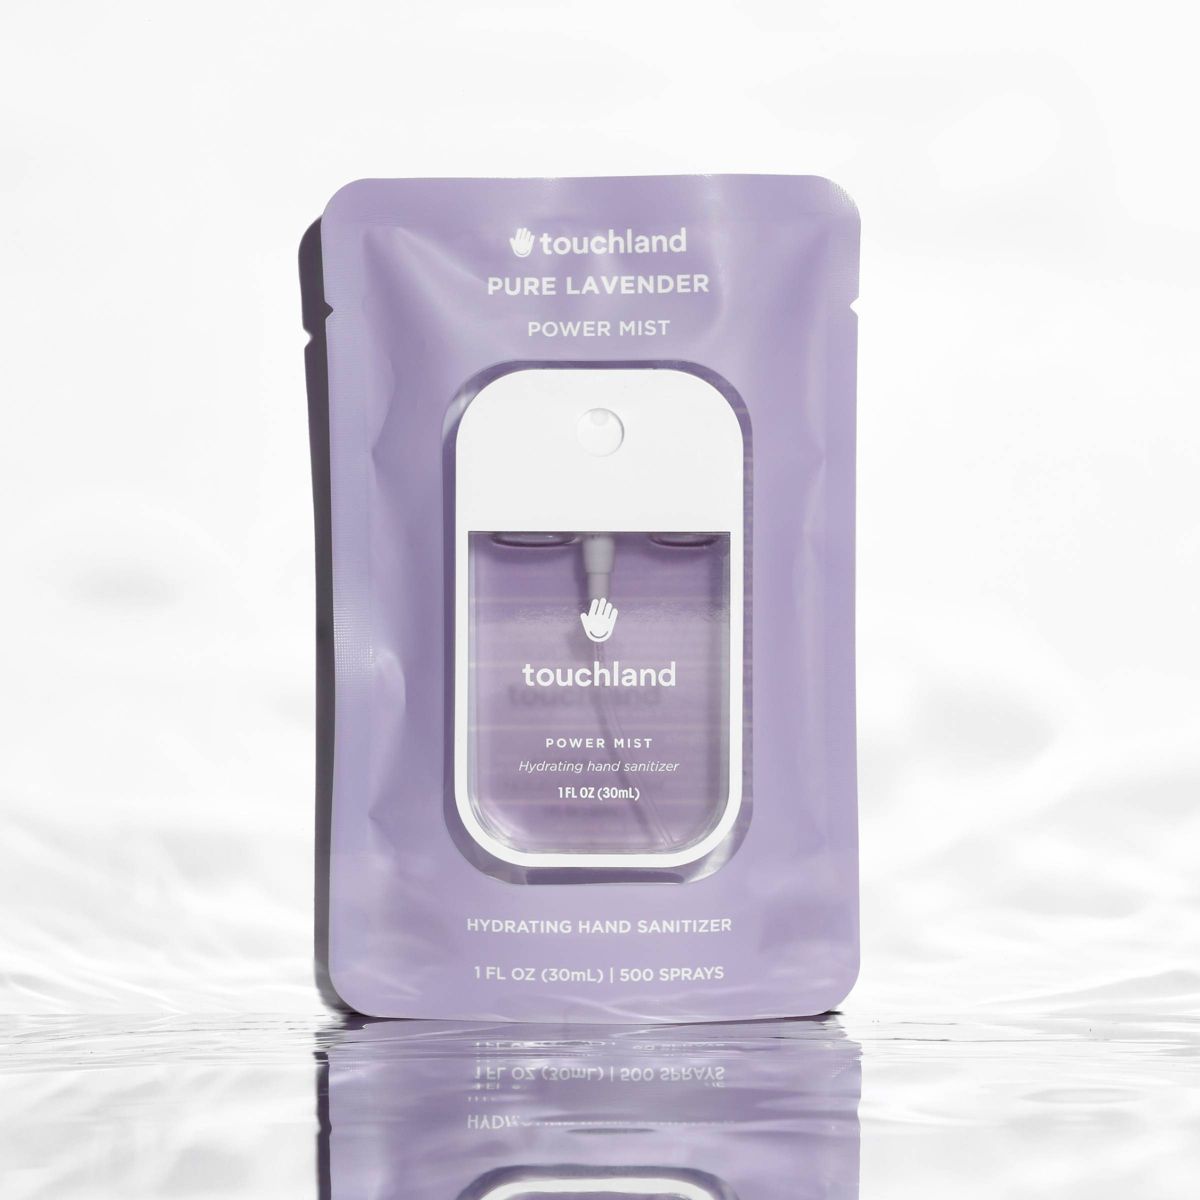 Touchland Pure Lavender Hydrating Hand Sanitizer - 1 fl oz | Target